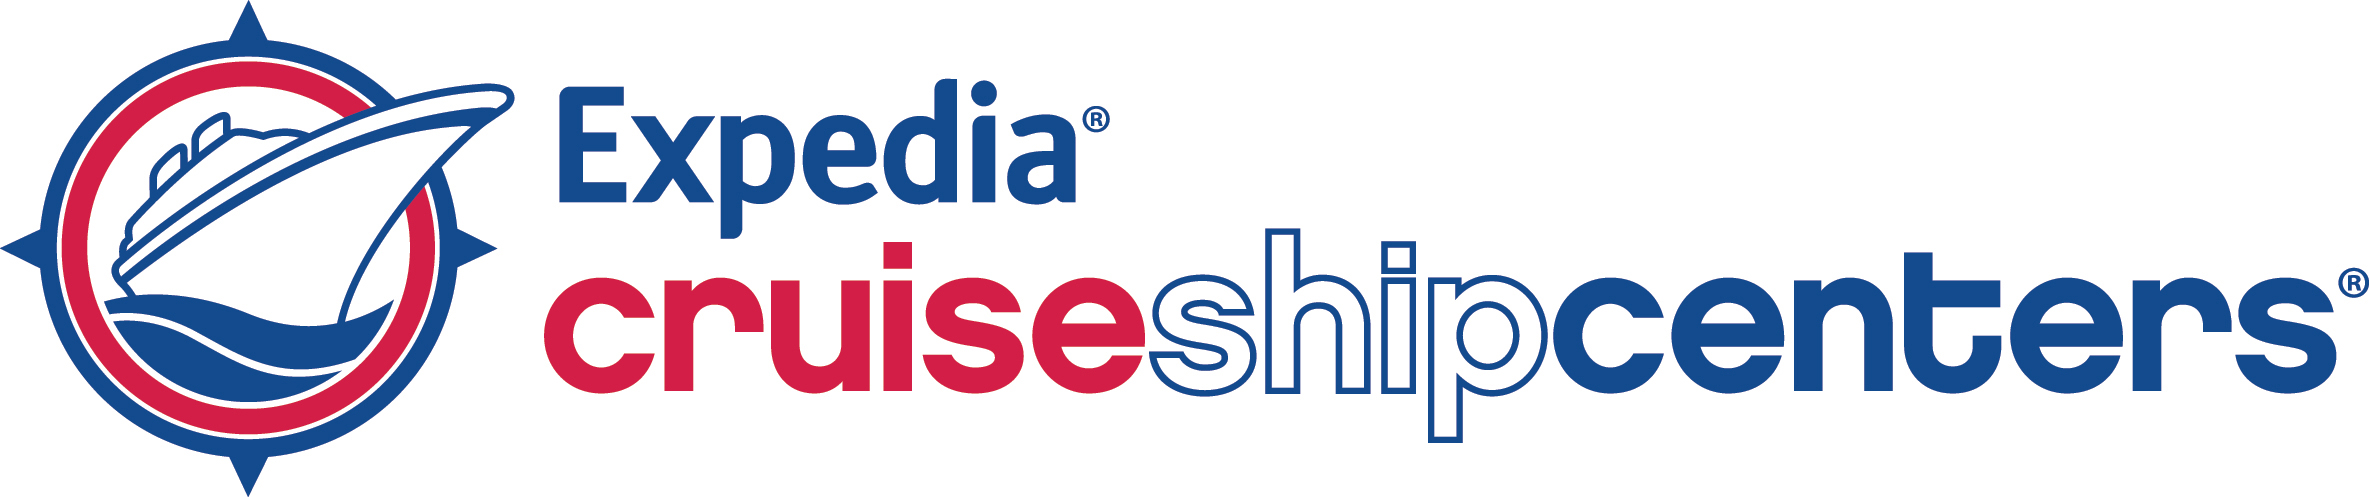 Expedia CruiseShipCenters logo